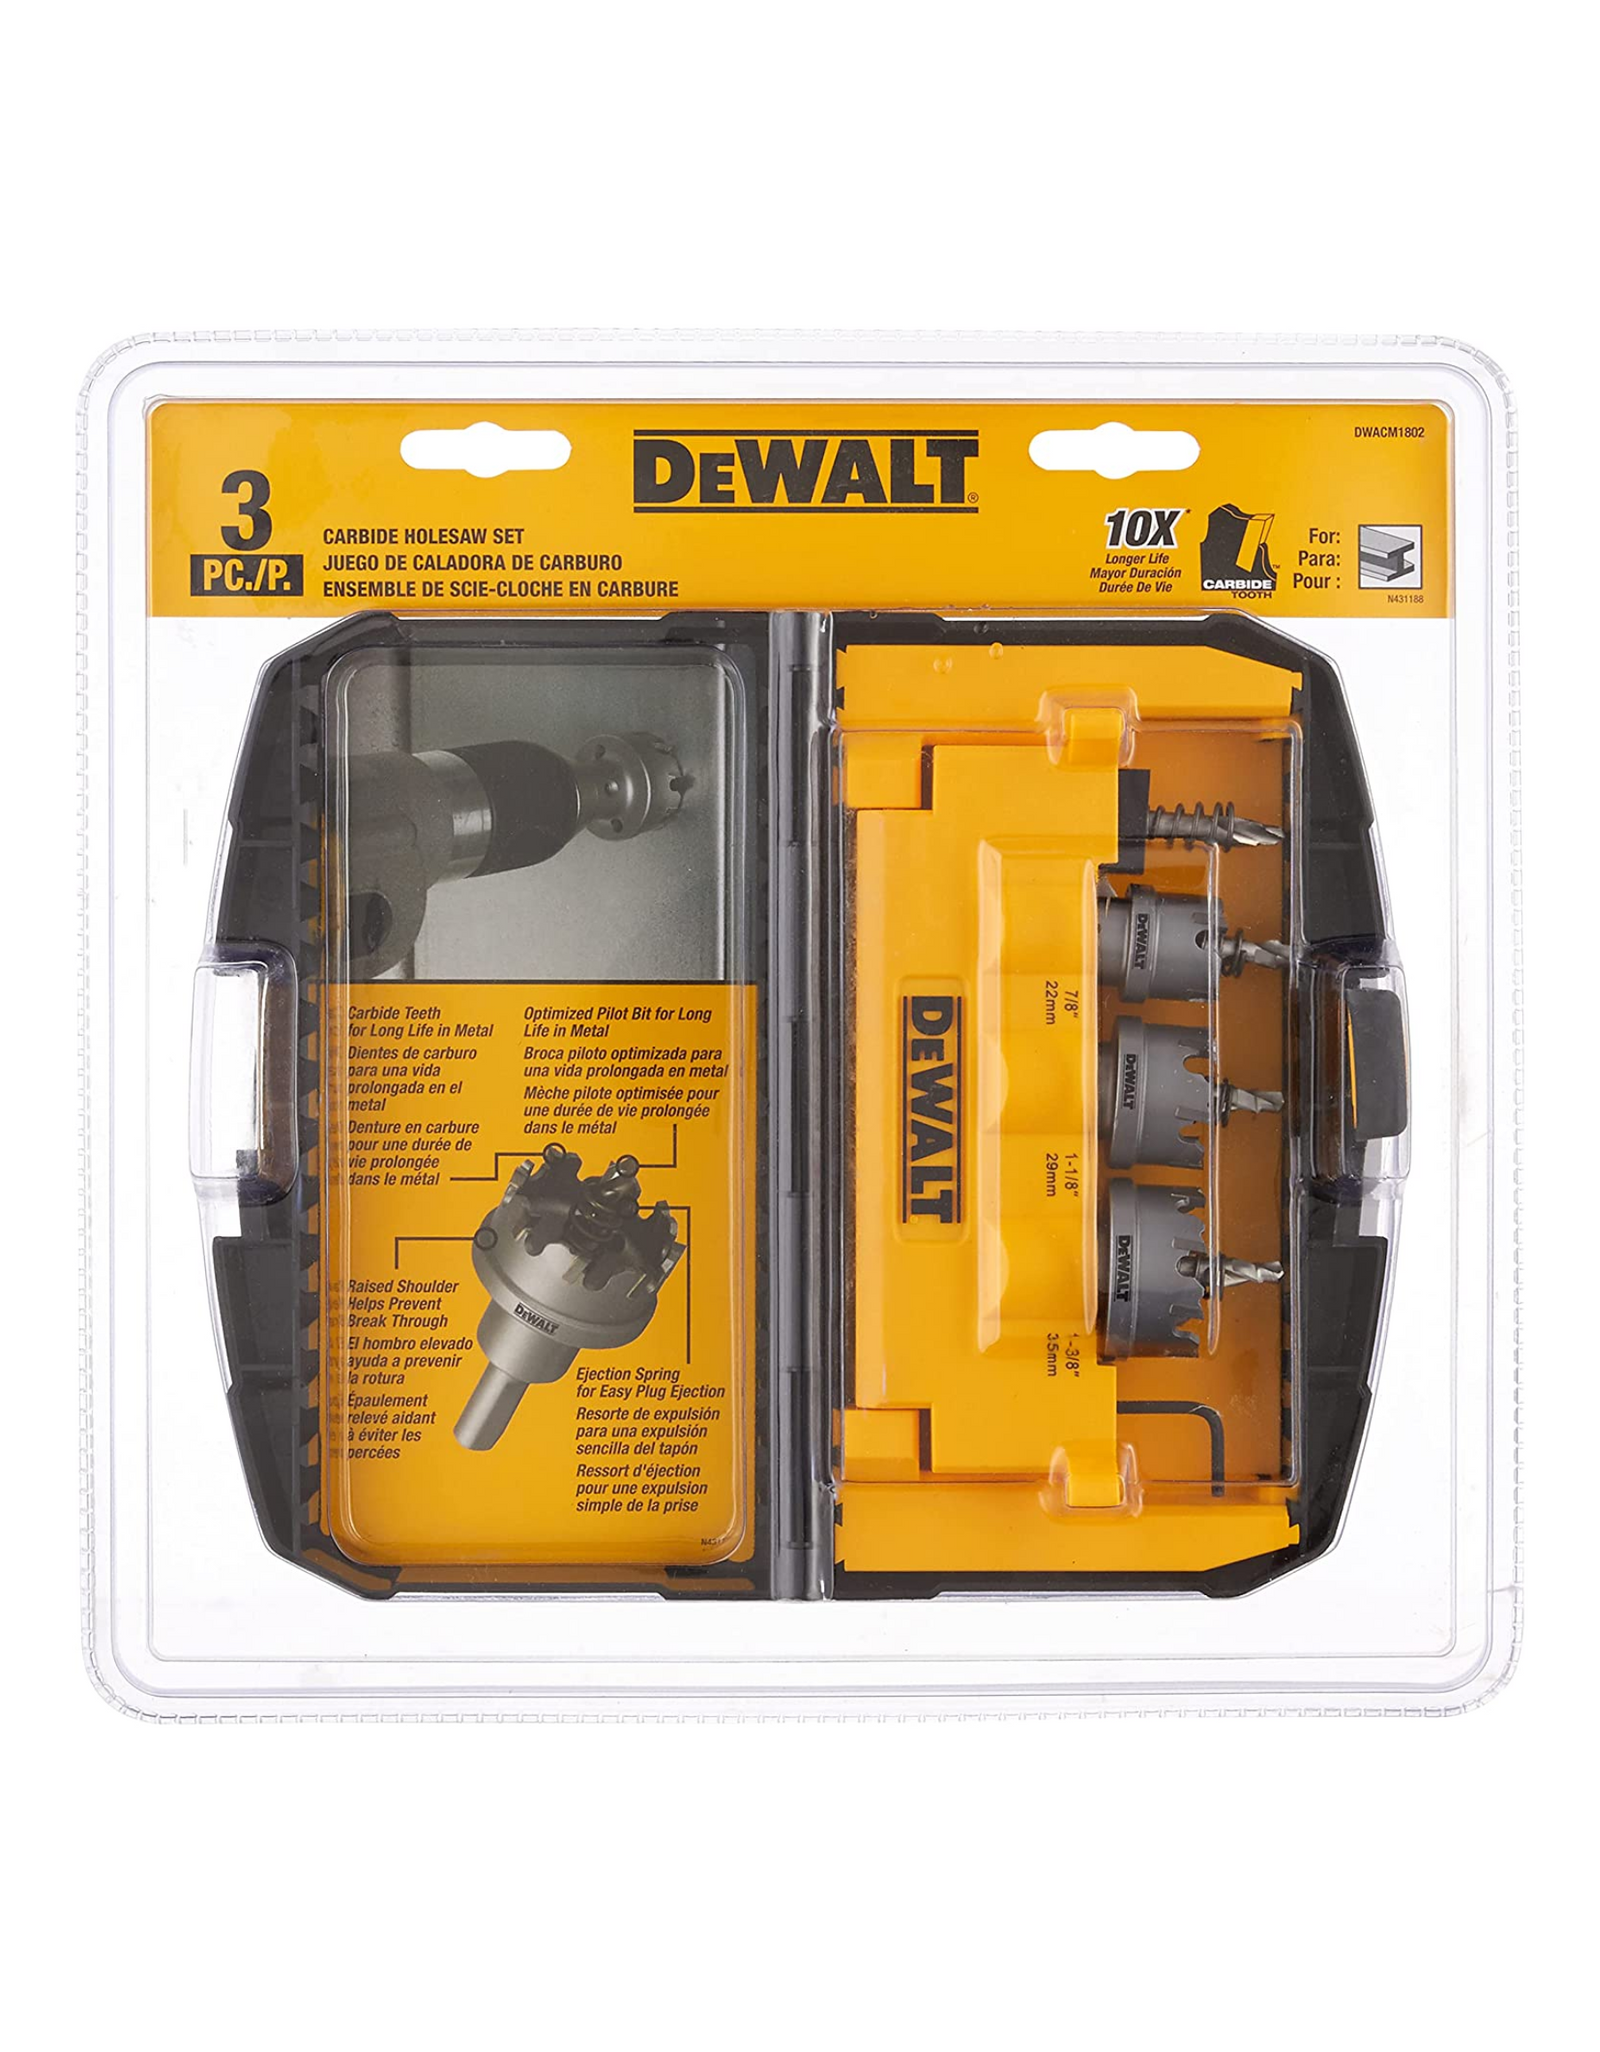 DEWALT Hole Saw Kit, Metal Cutting (DWACM1802), Carbide, 3-Piece